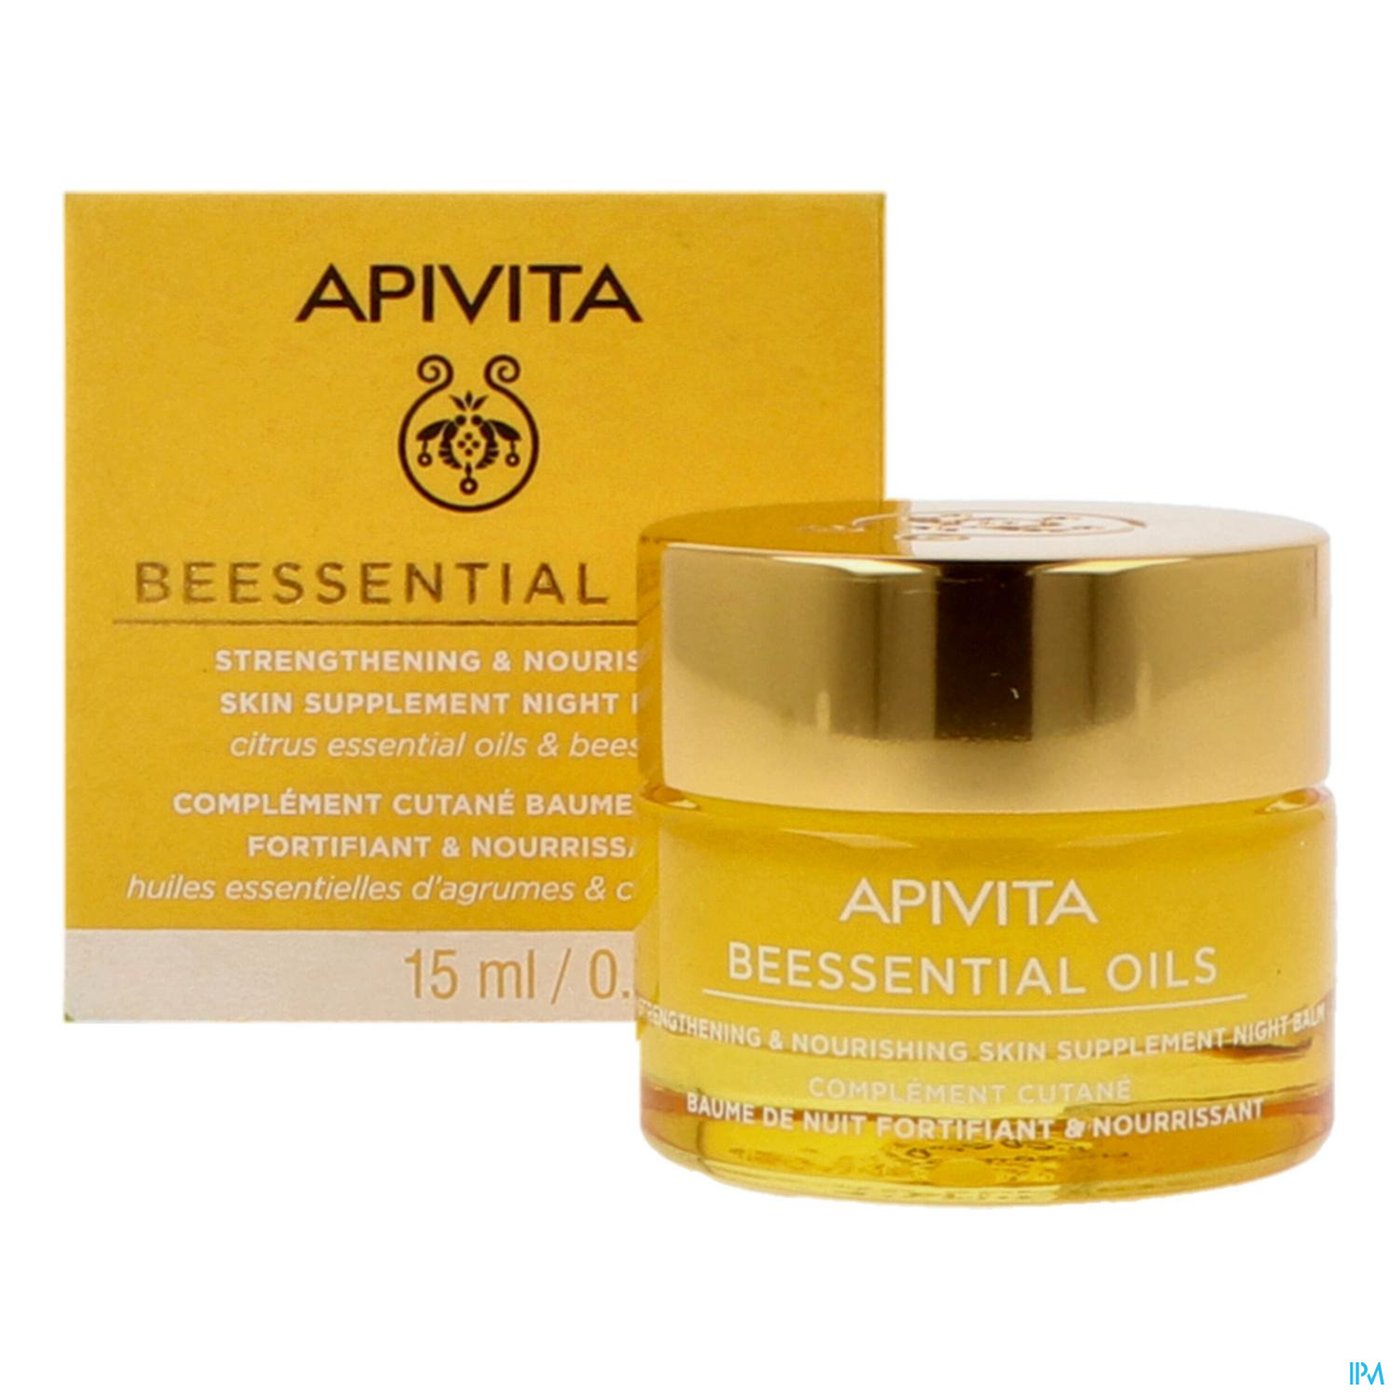 Apivita Beessential Strengt.&nour. Night Balm 15ml productshot